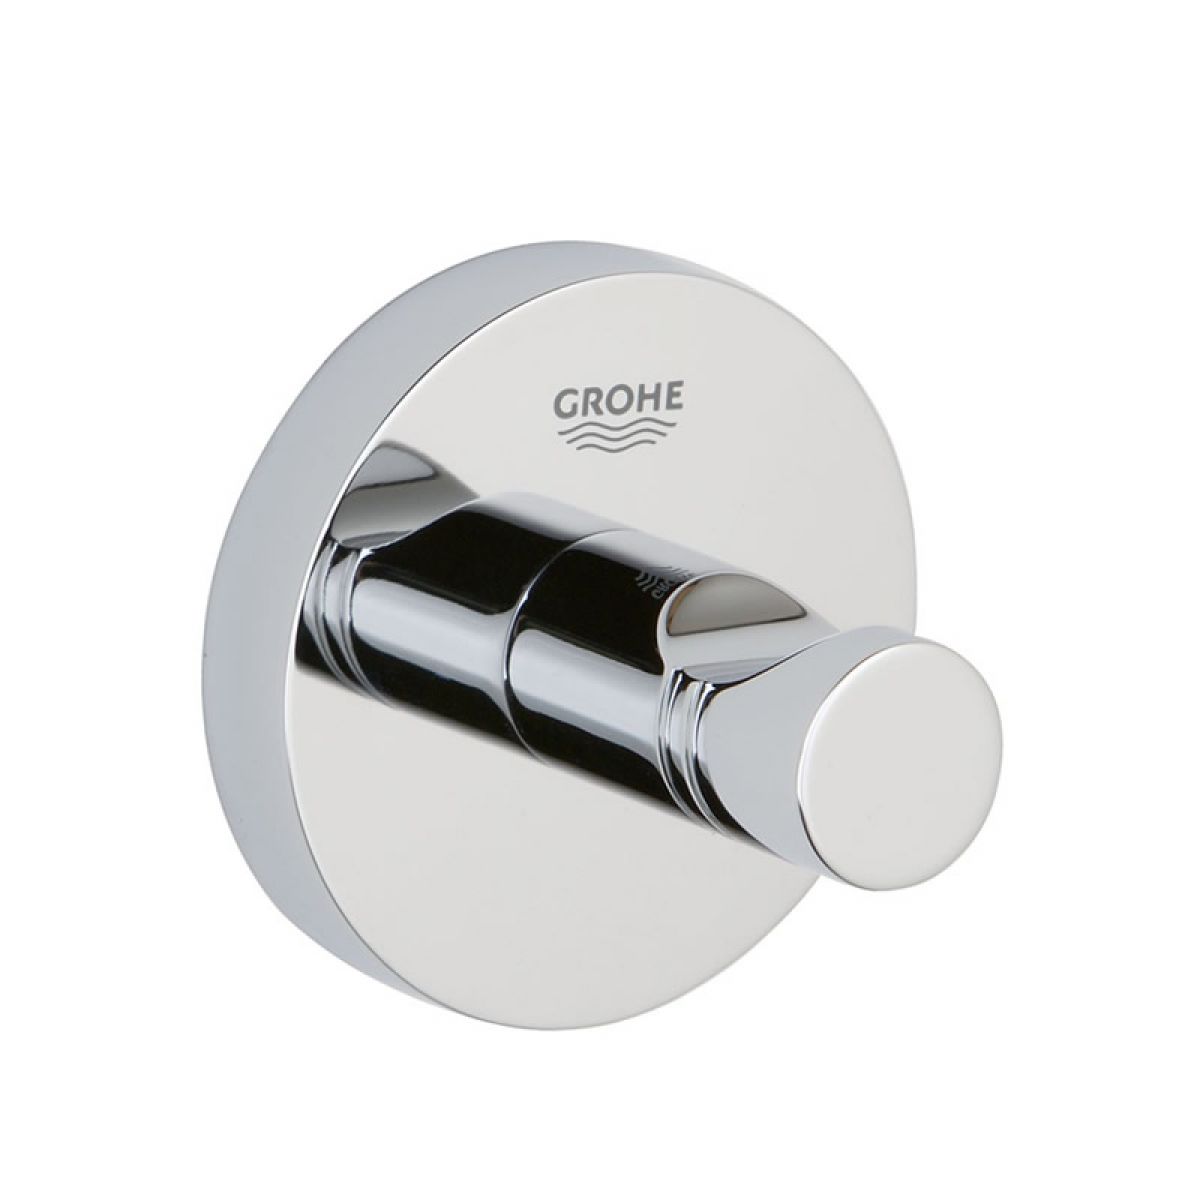 GROHE Grohe Essentials Single Robe Hook Bathroom Accessory Round Chrome 40364001 4005176326332 